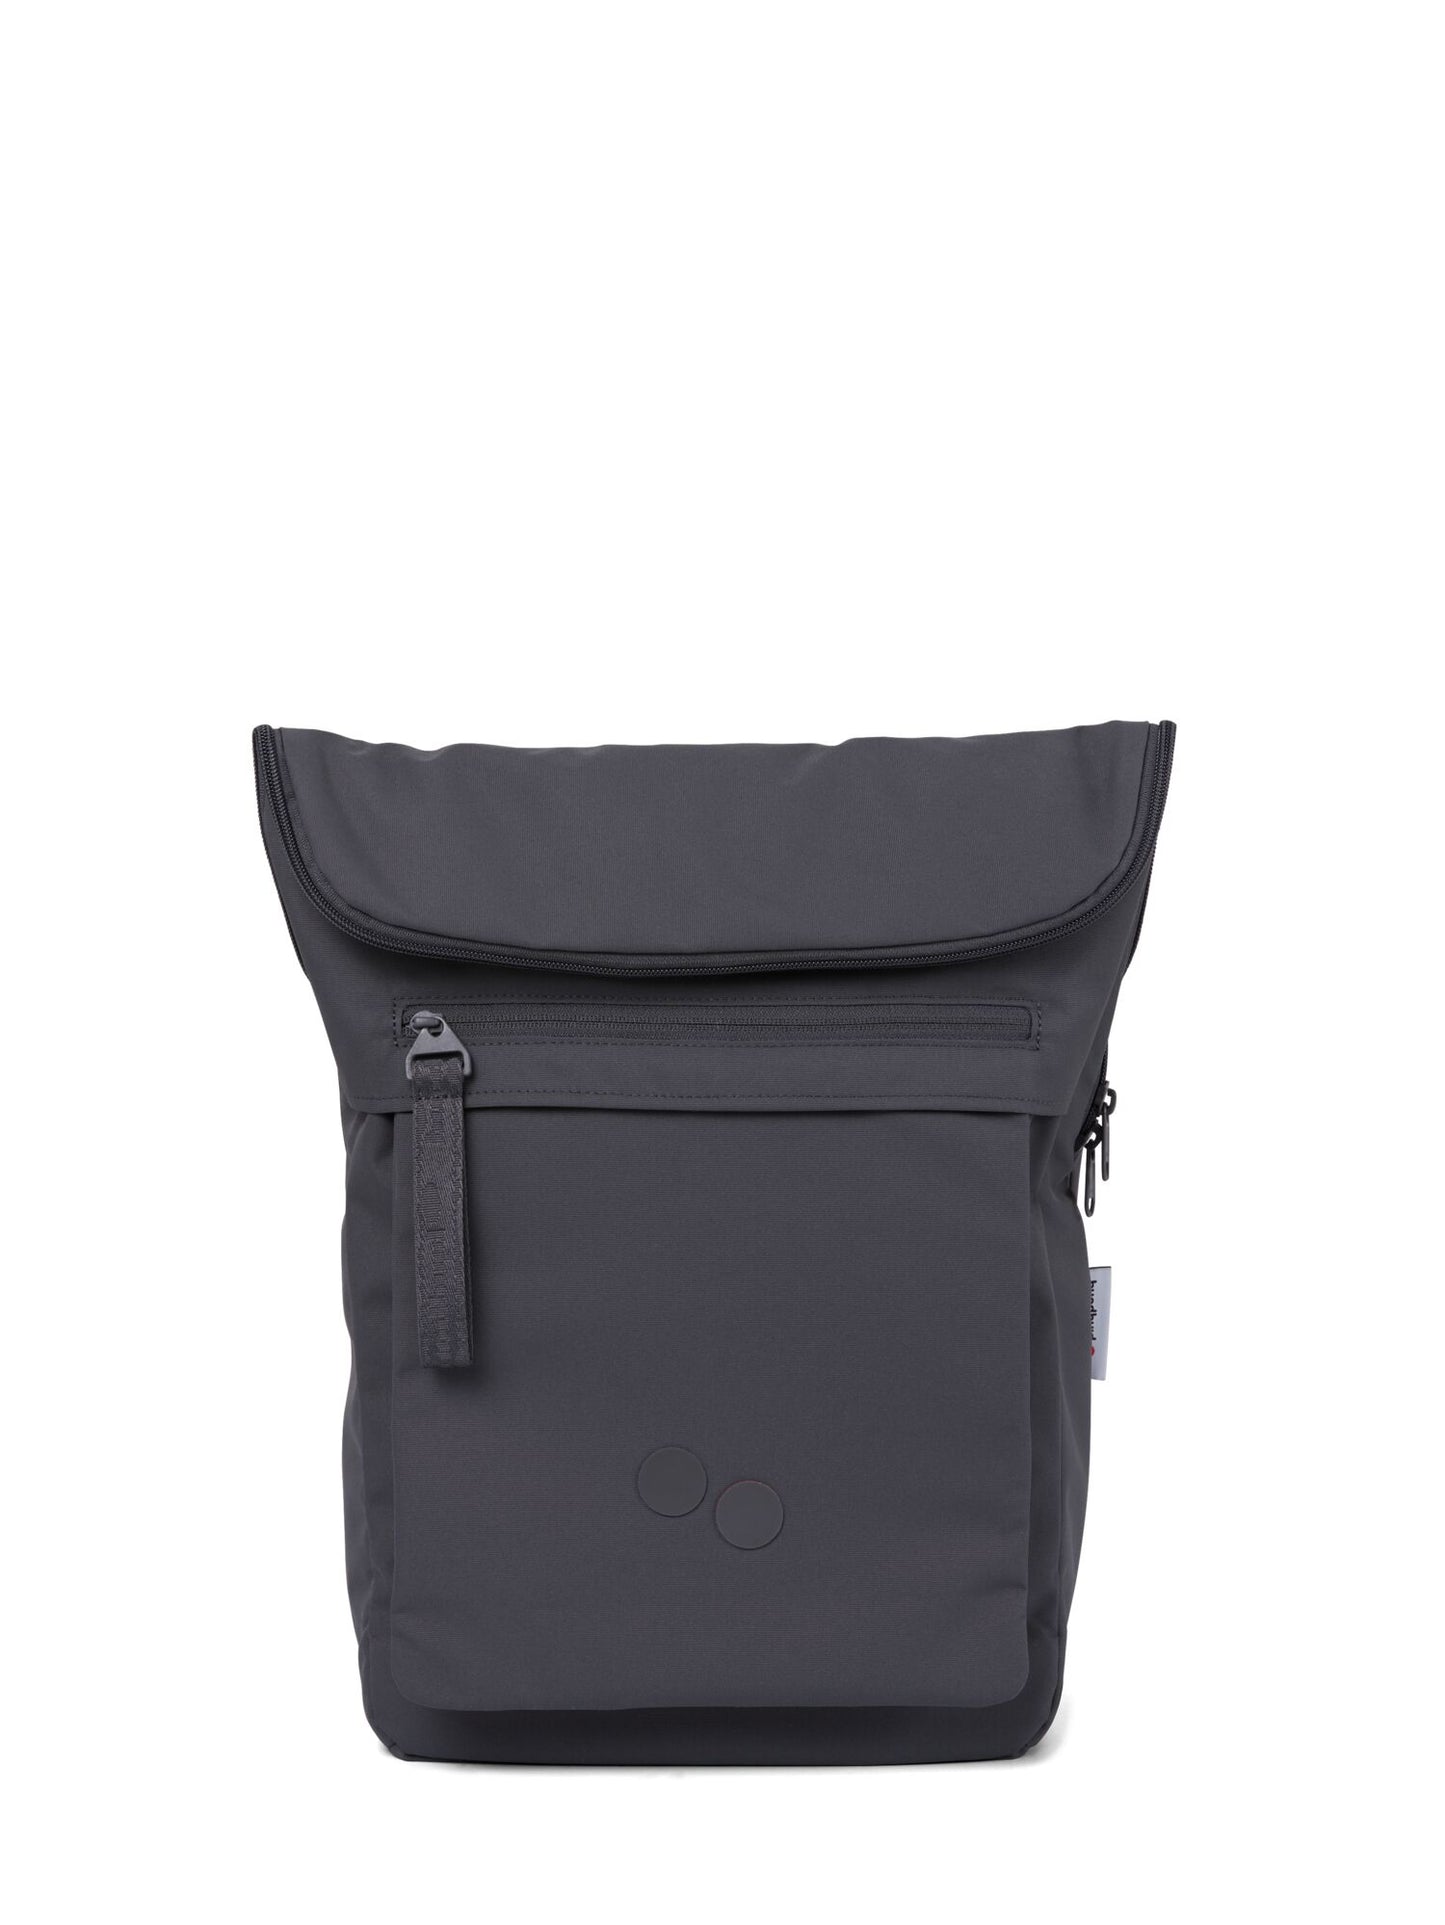 pinqponq-backpack-Klak-Deep-Anthra-front